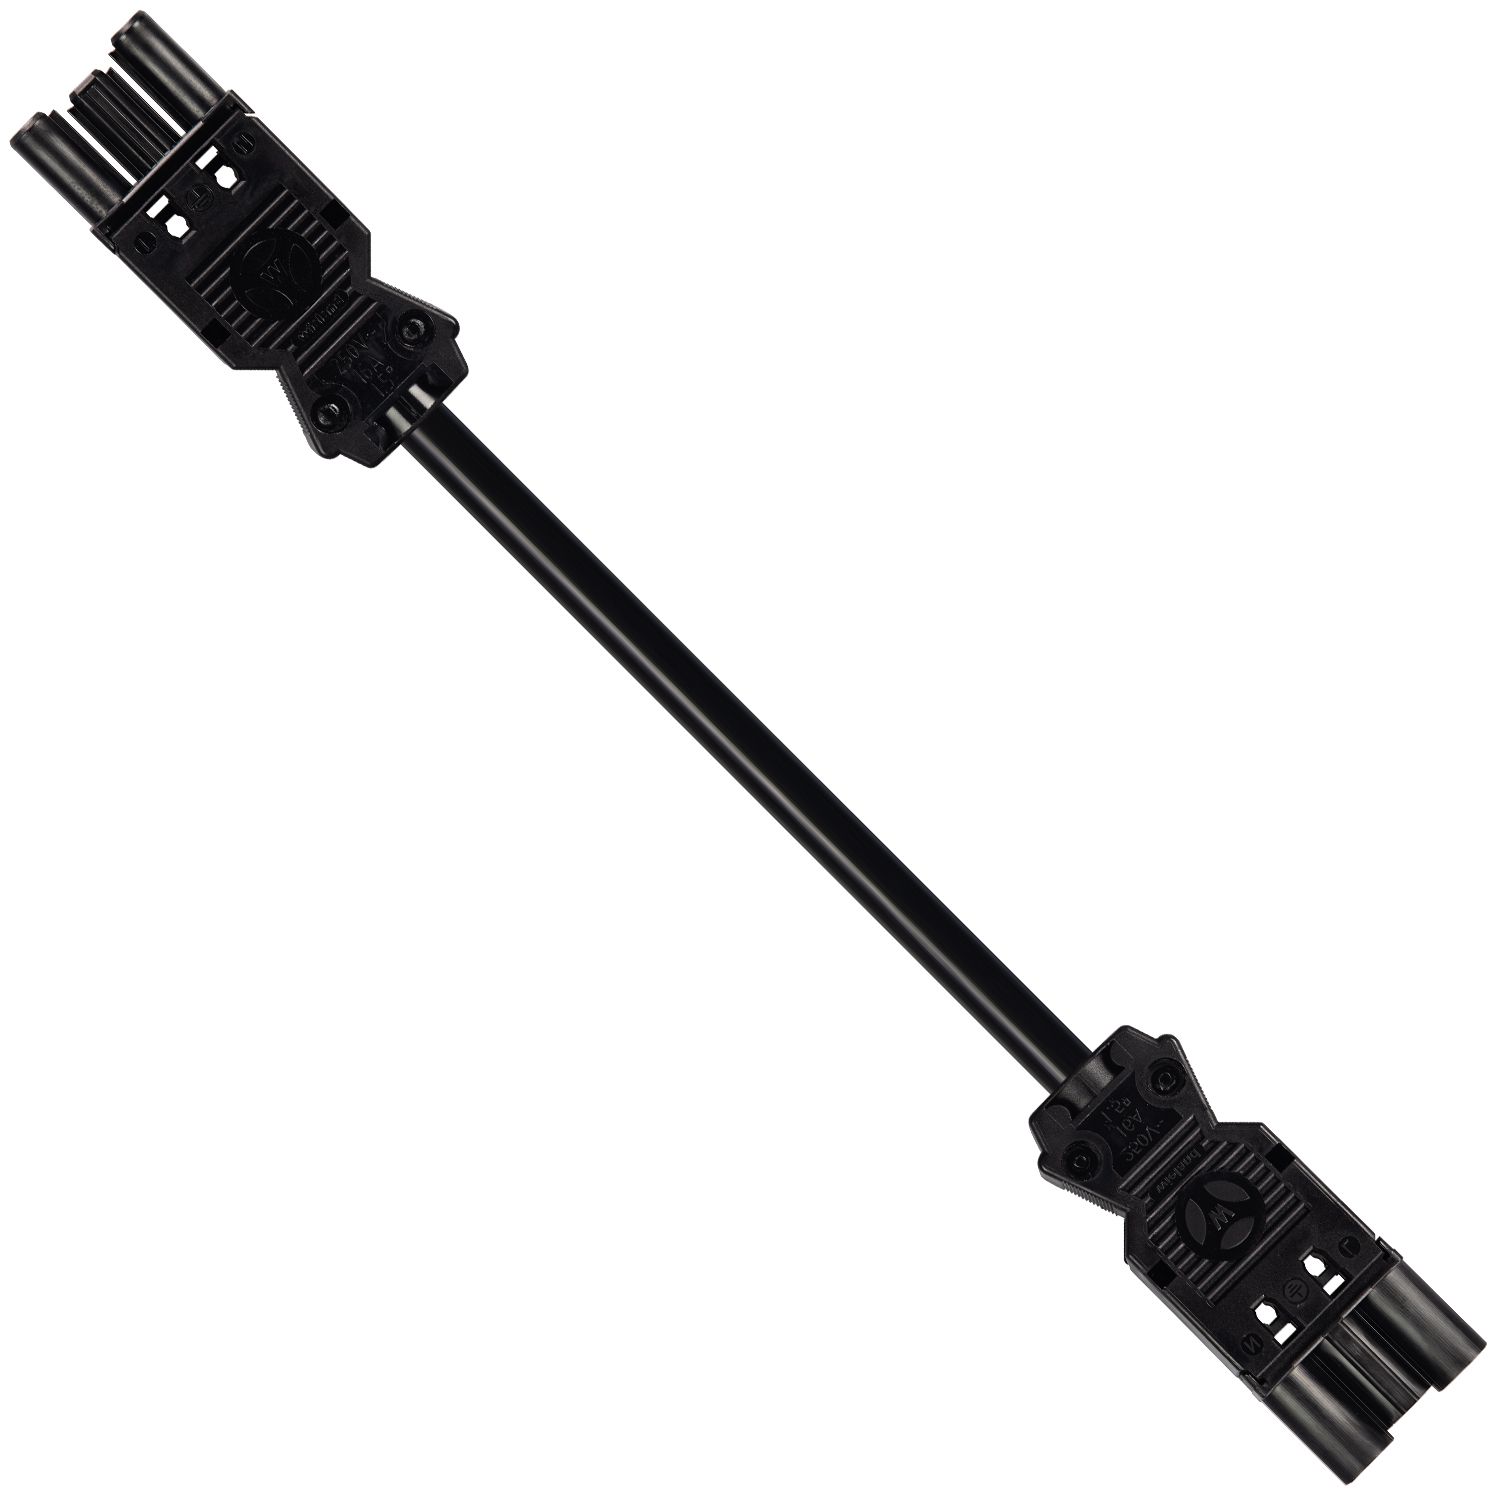 Kindermann extension socket / plug GST18 - 3.0 m cable length